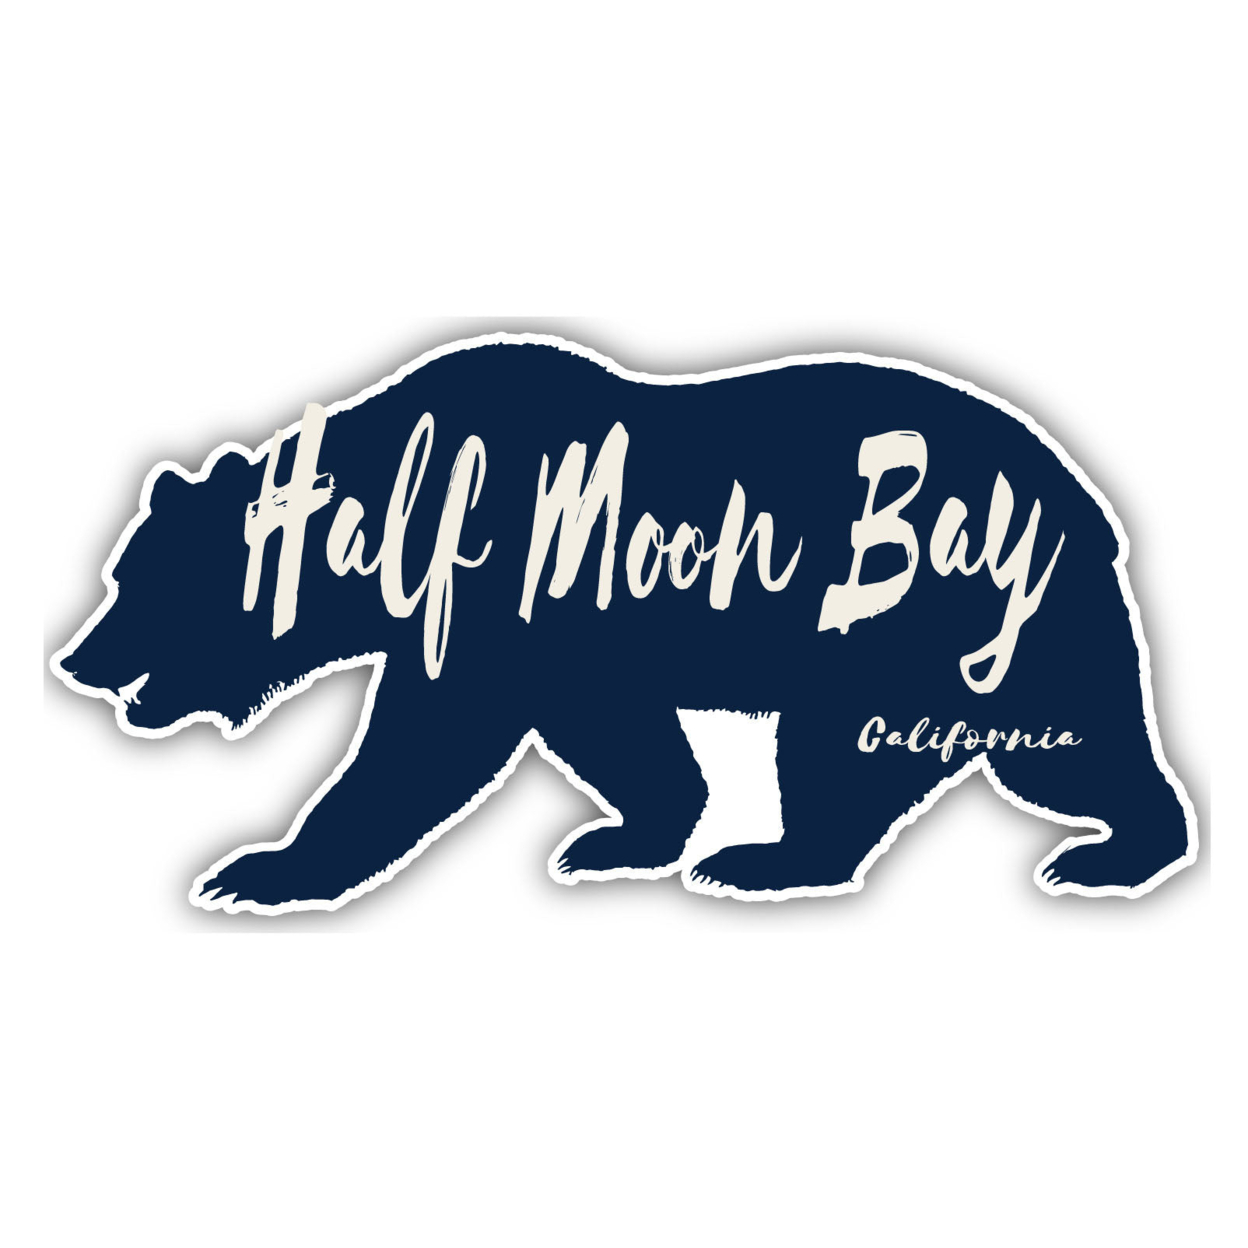 Half Moon Bay California Souvenir Decorative Stickers (Choose Theme And Size) - Single Unit, 6-Inch, Tent